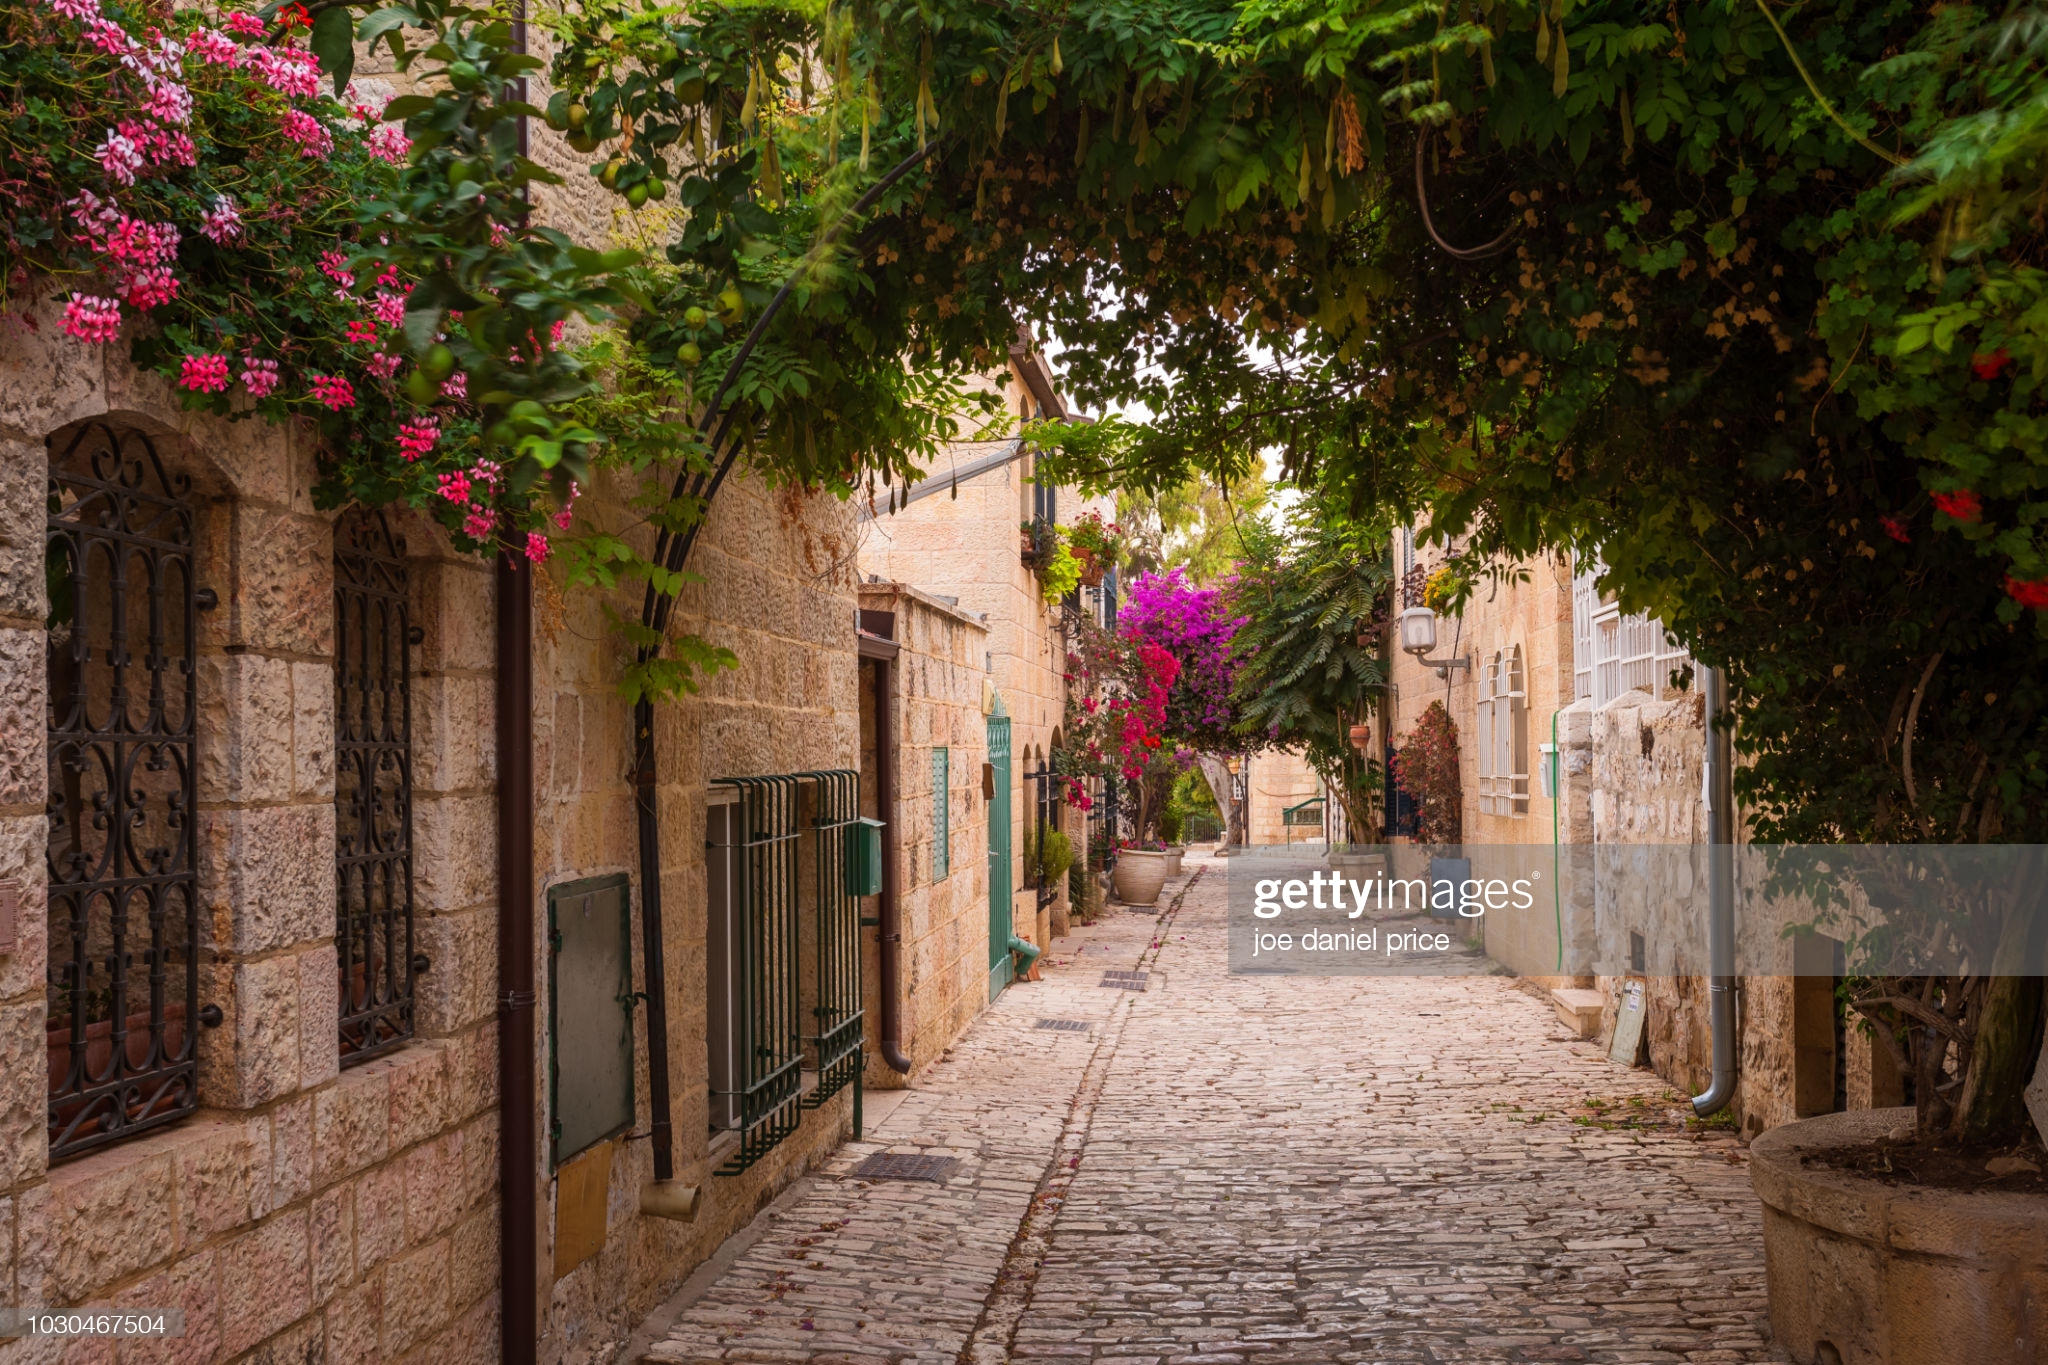 flowers-streets-jerusalem-israel-picture-id1030467504